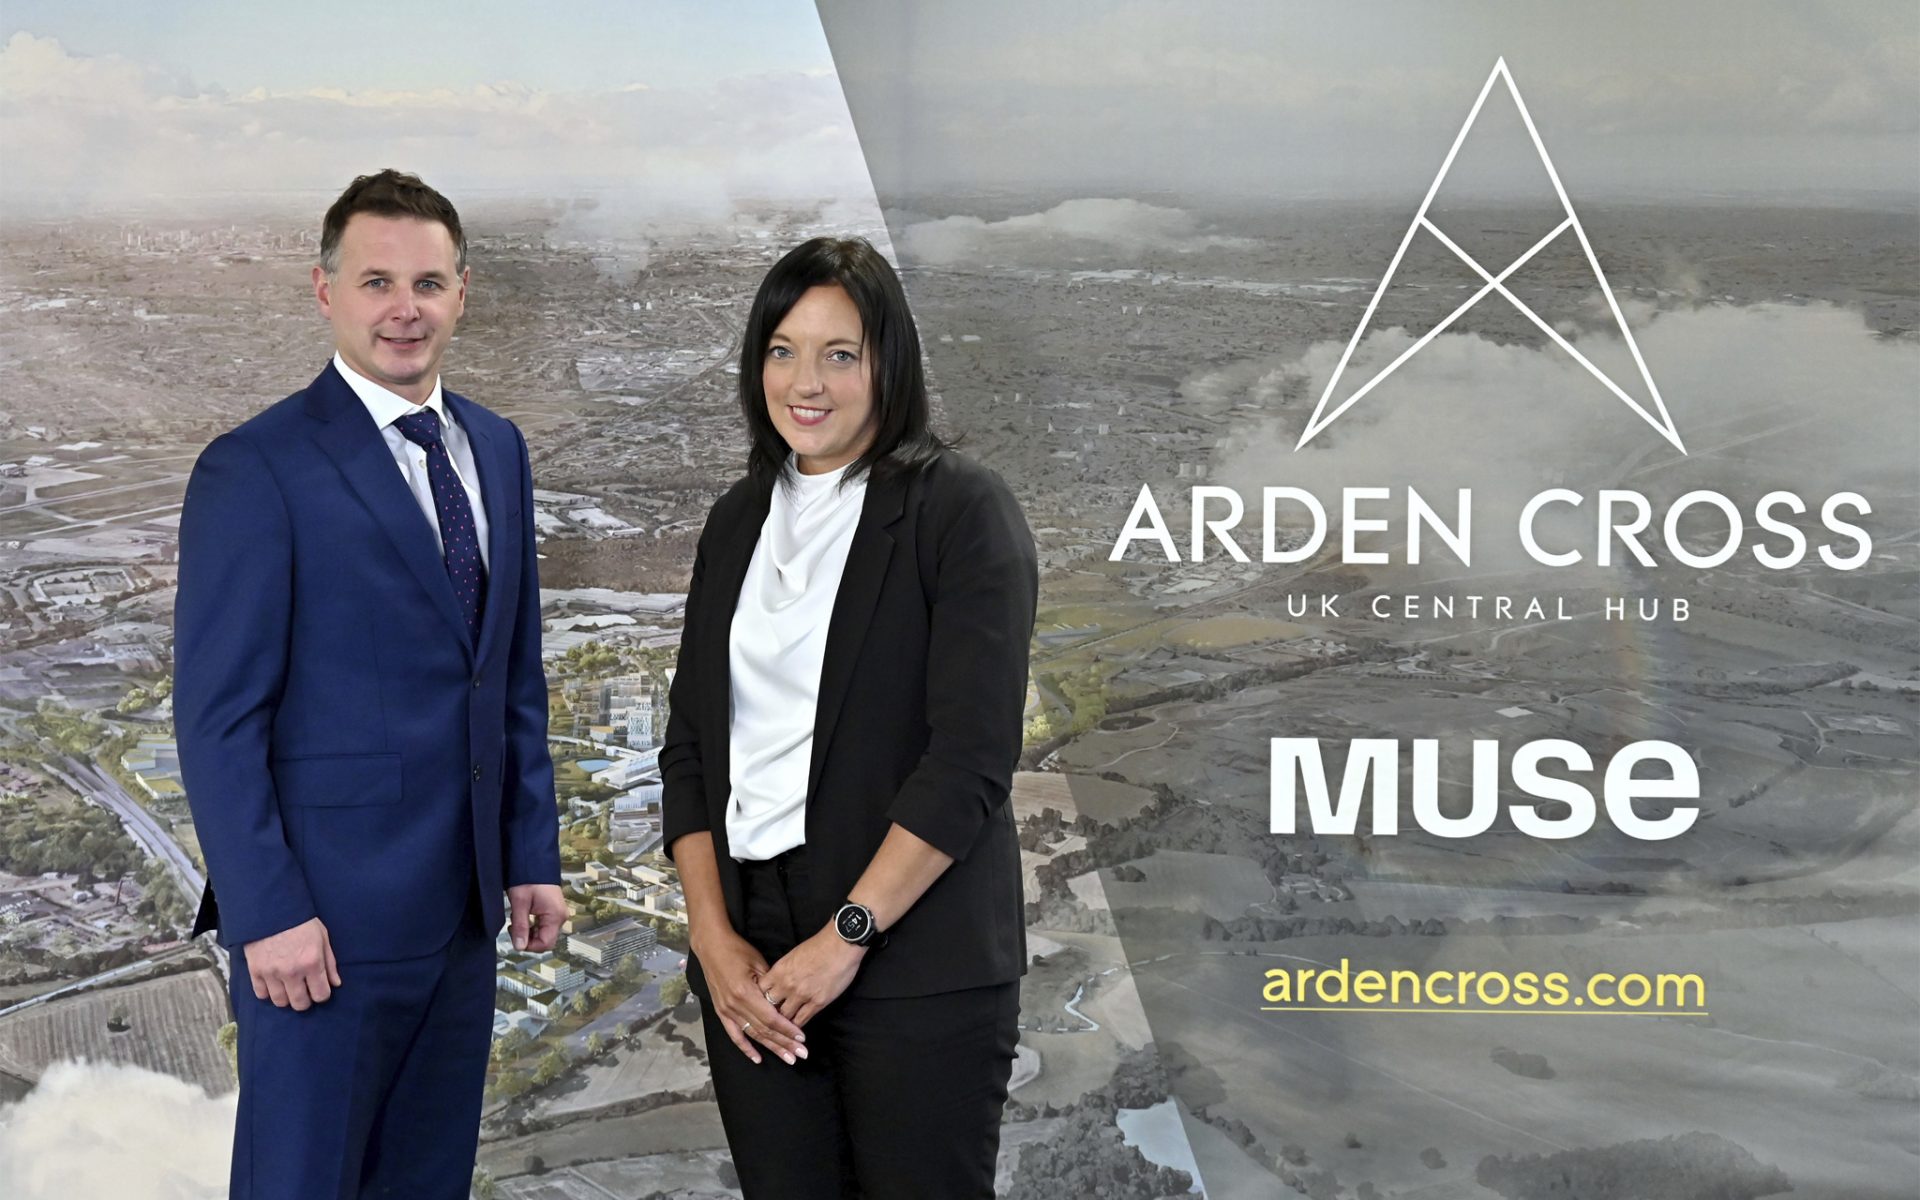 Arden Cross UK Central Hub Muse ArdenCross.com